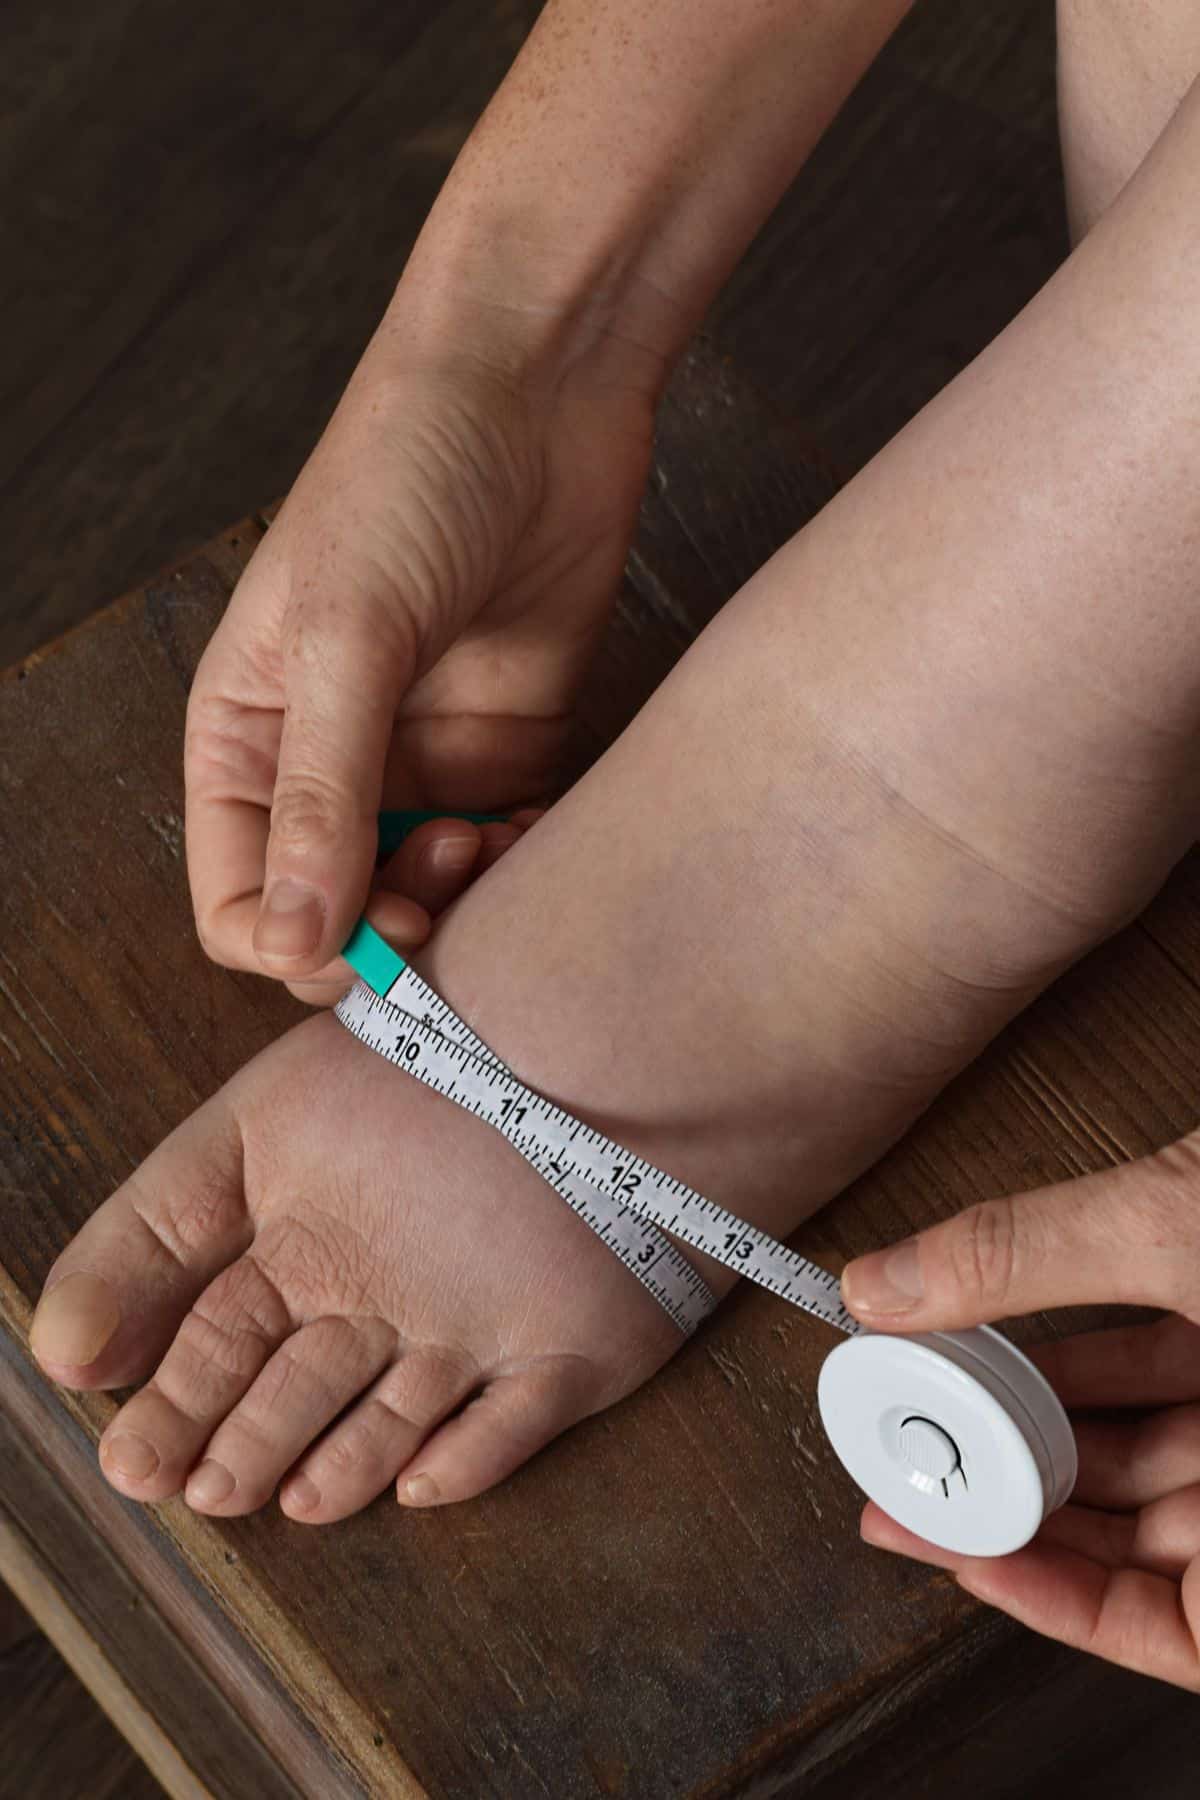 a woman measuring her swollen foot.